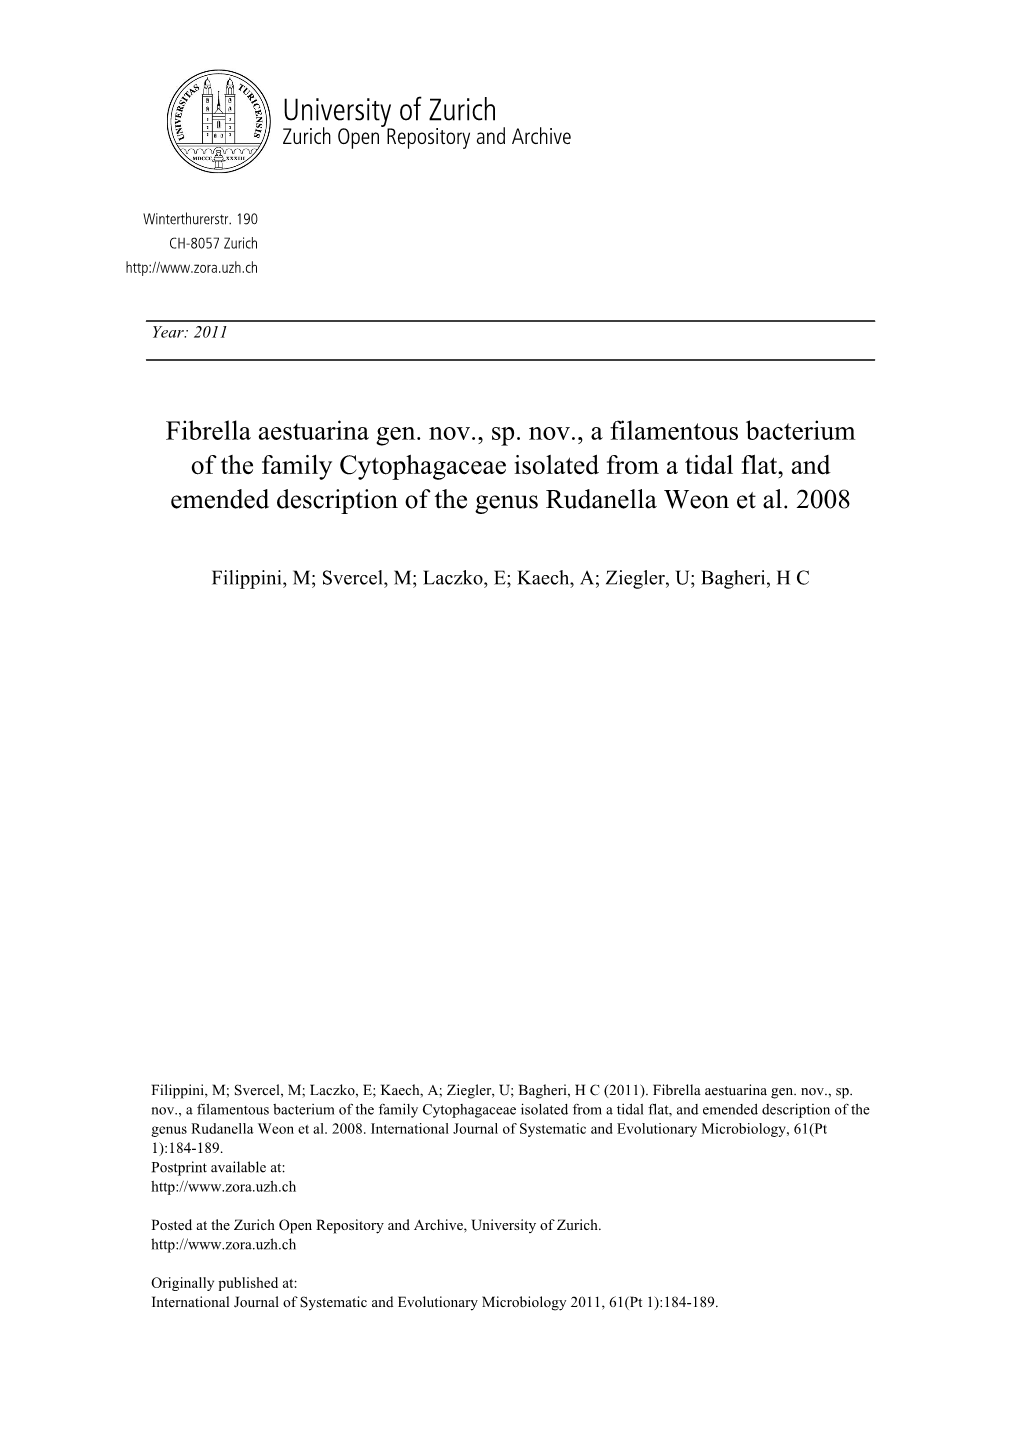 Fibrella Aestuarina Gen. Nov., Sp. Nov., a Filamentous Bacterium of the Family Cytophagaceae Isolated from a Tidal Flat, and Emended Description of the Genus Rudanella Weon Et Al. 2008